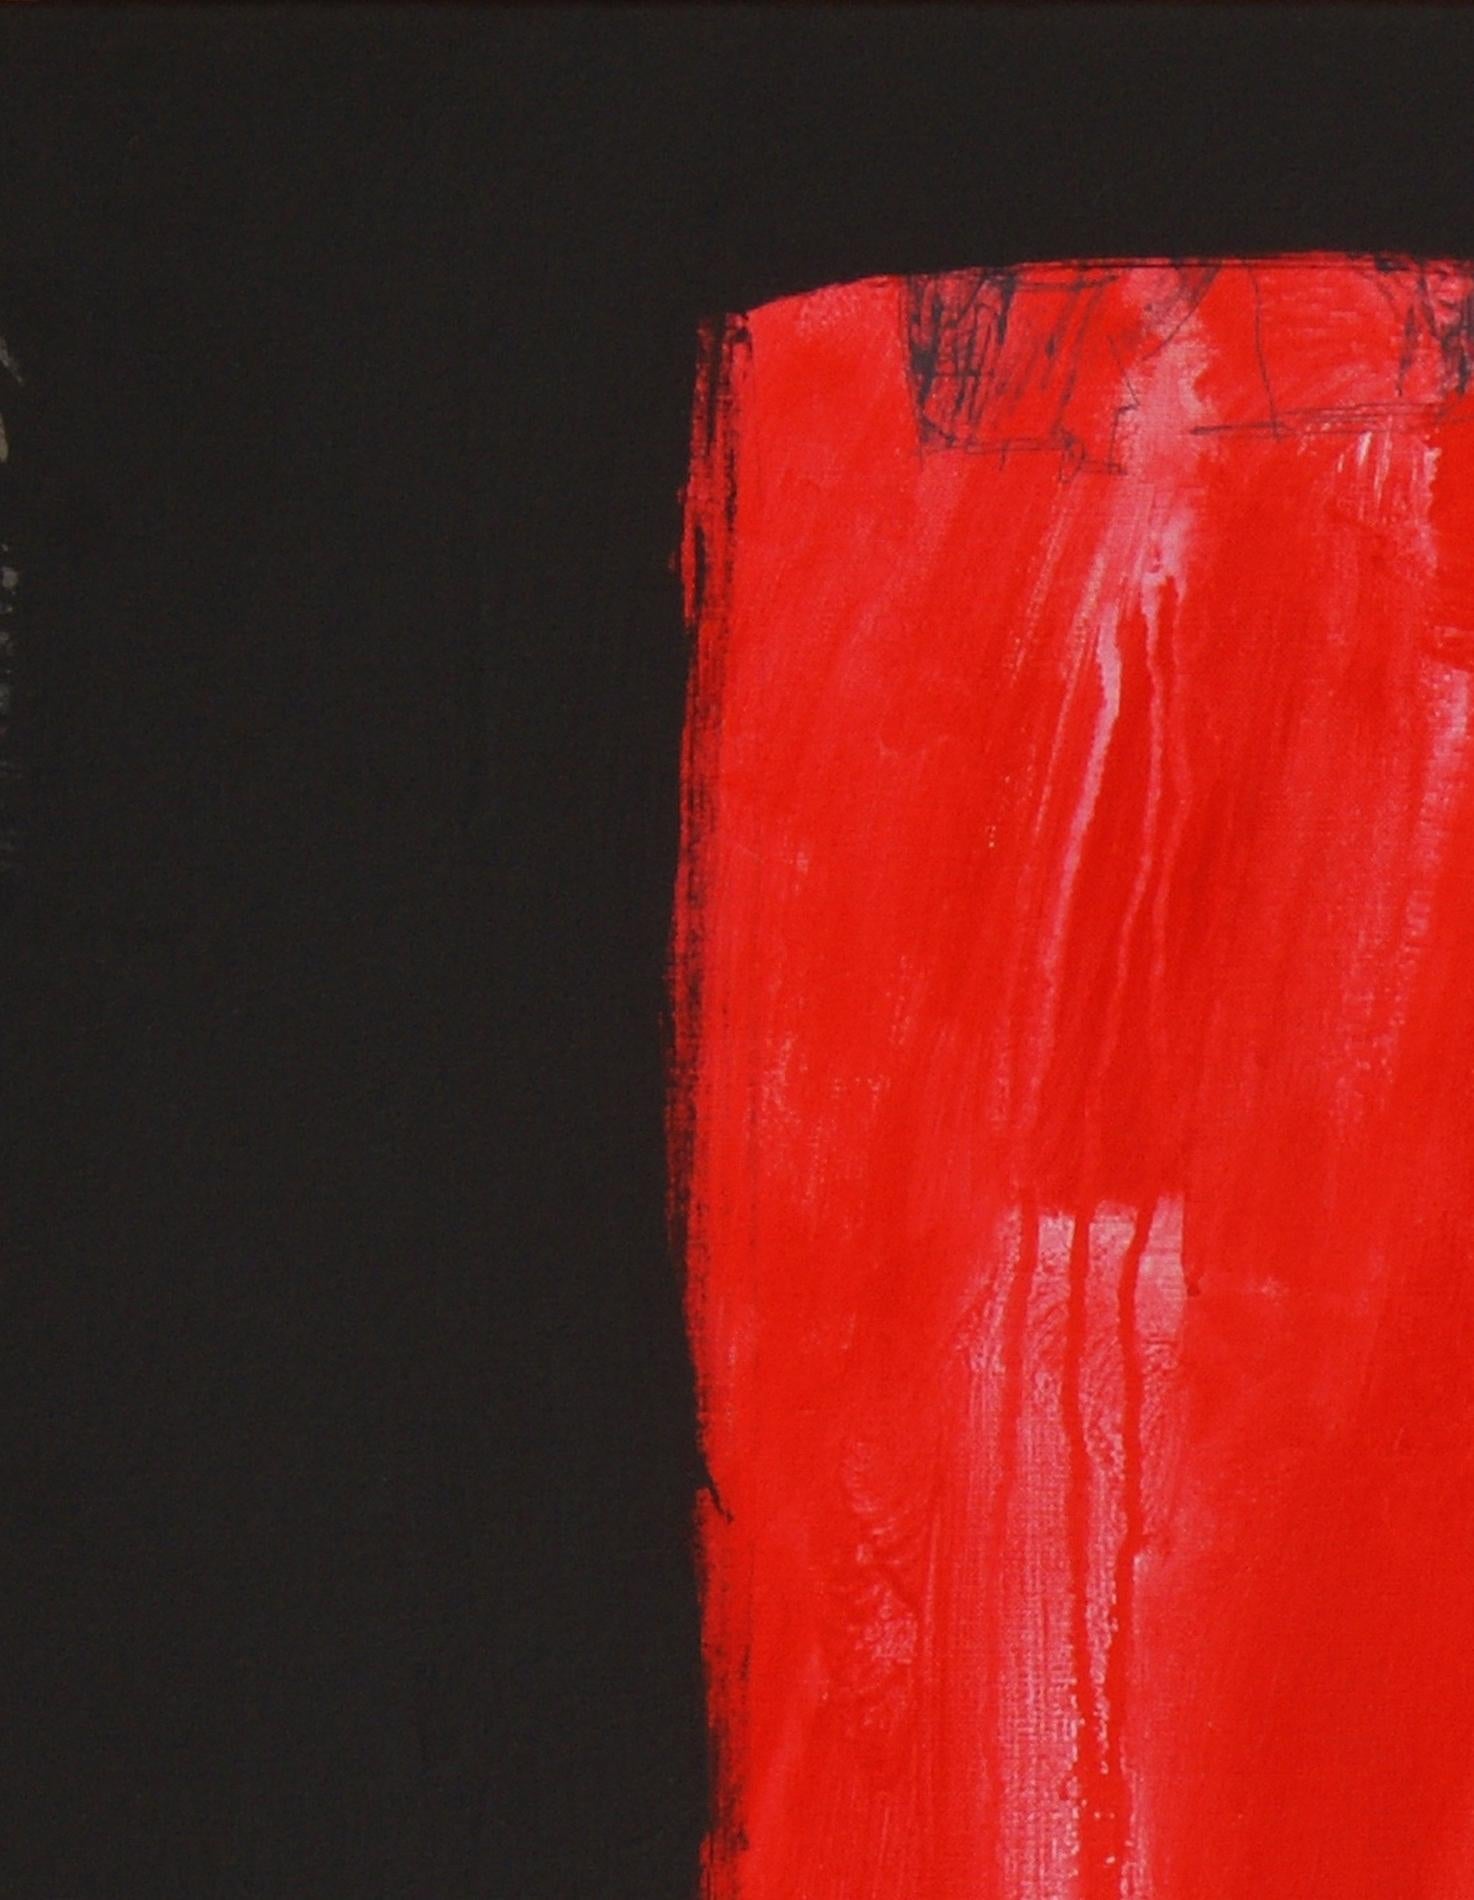 Ruz  Black Big  Red orignal  abstract canvas acrylic painting - Abstract Painting by RAFAEL RUZ